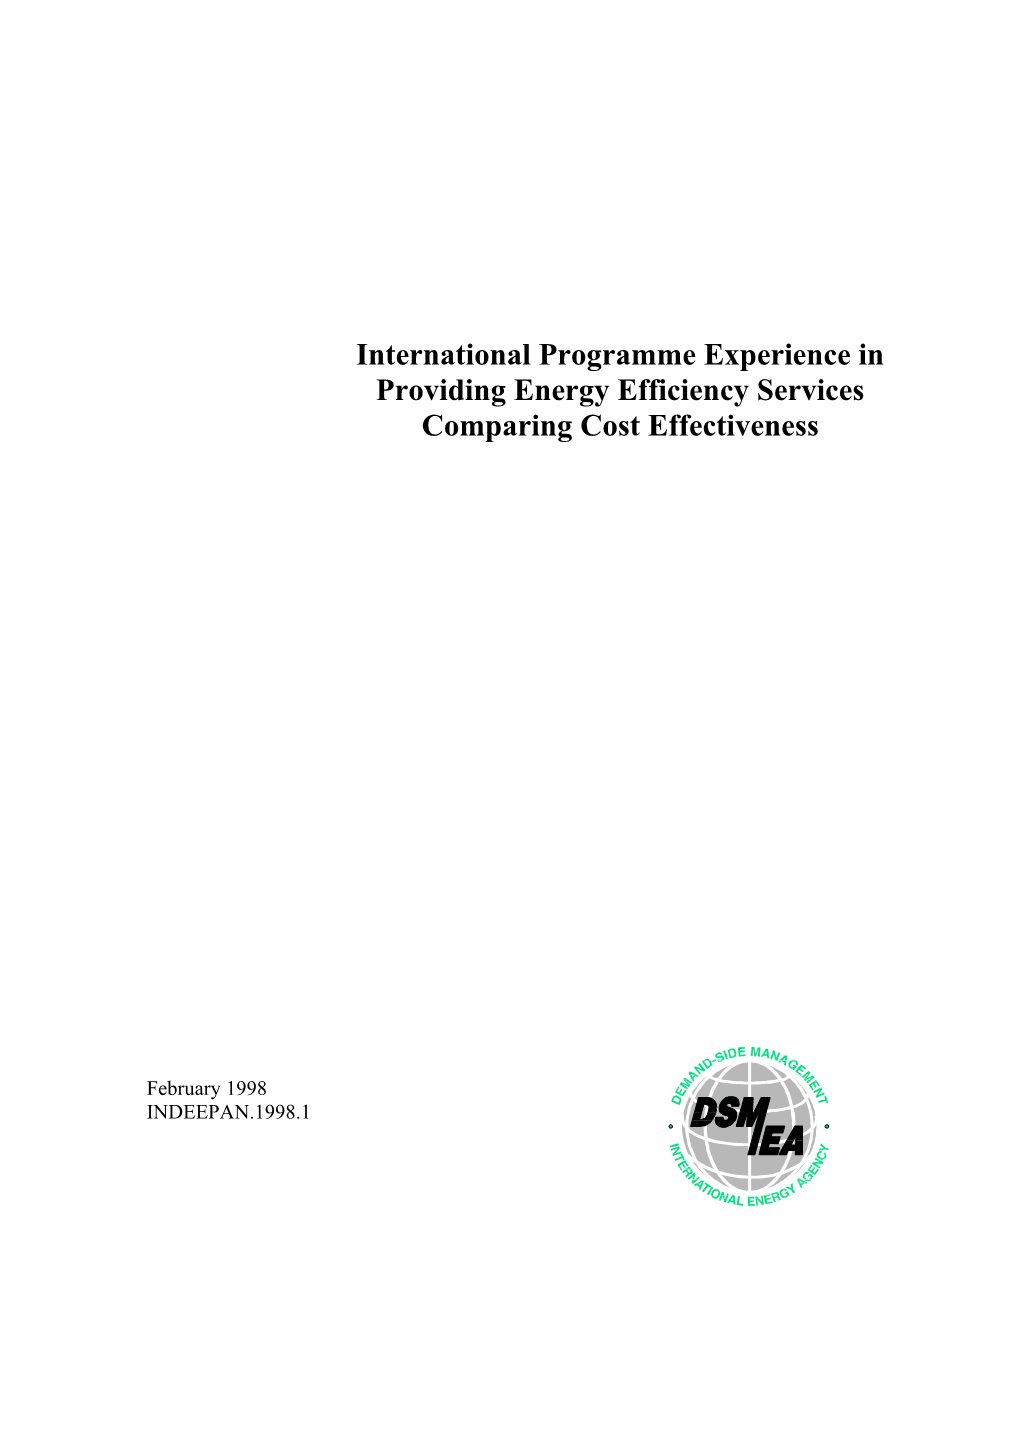 Providing Energy Efficiency Services